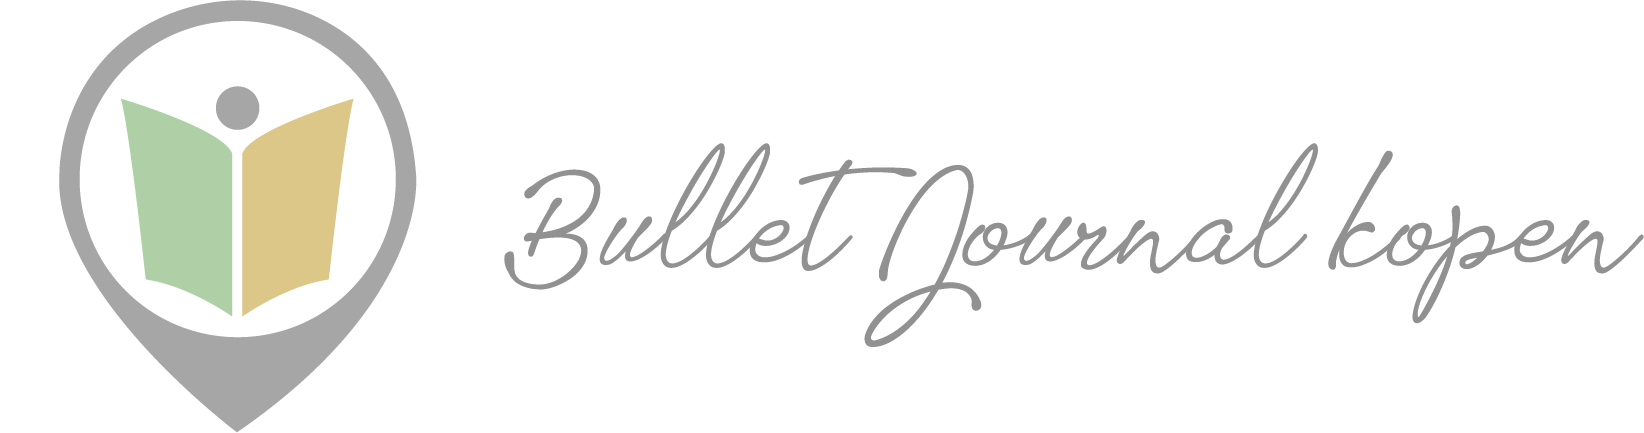 bullet journal washi tape